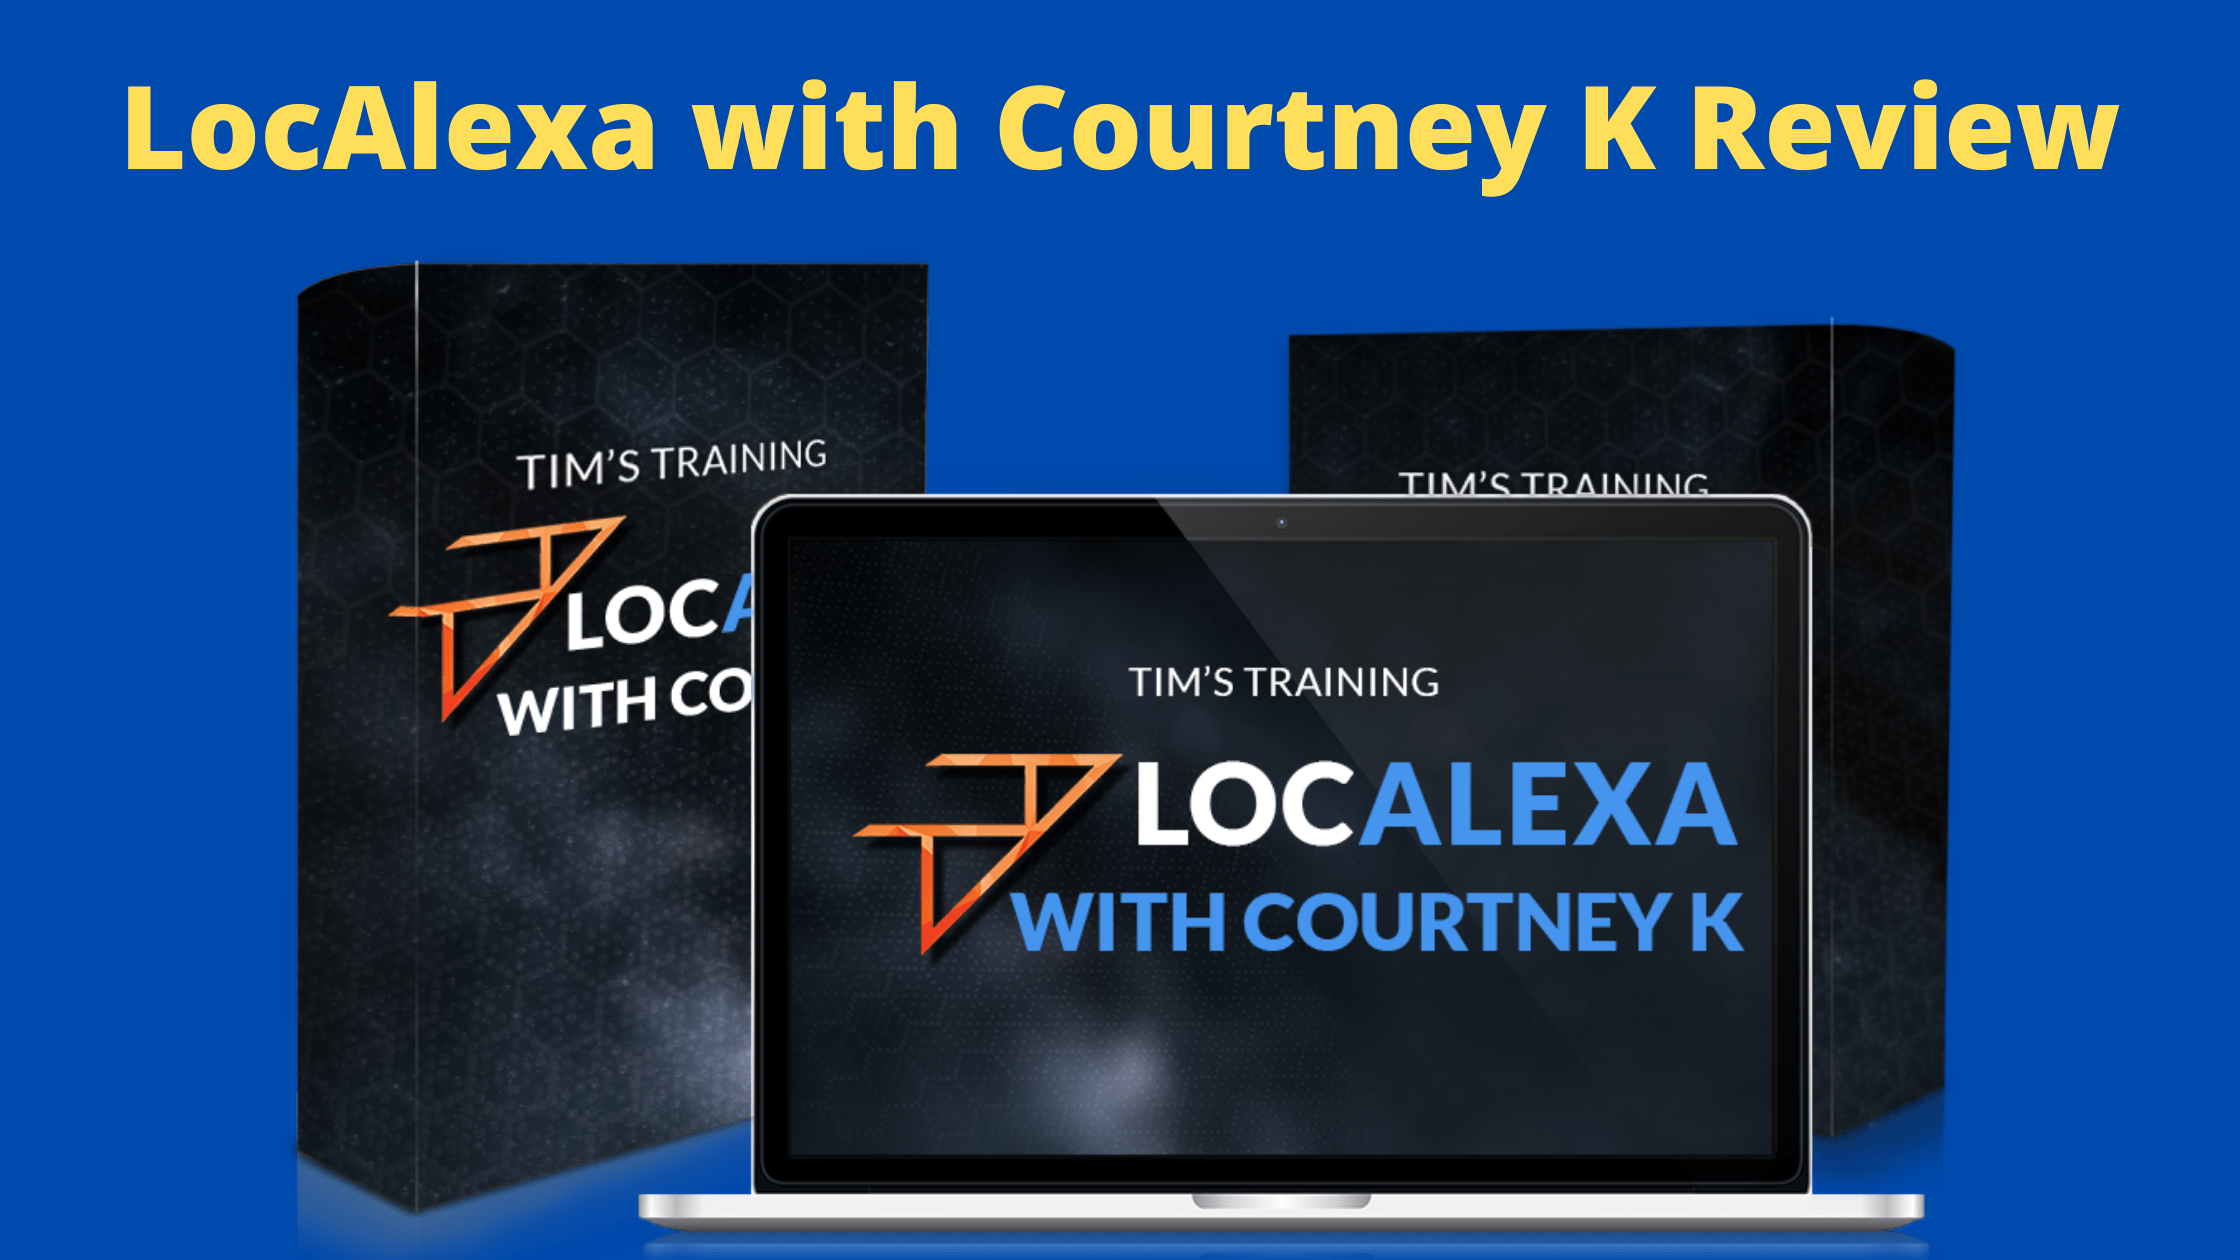 LocAlexa with Courtney K Review